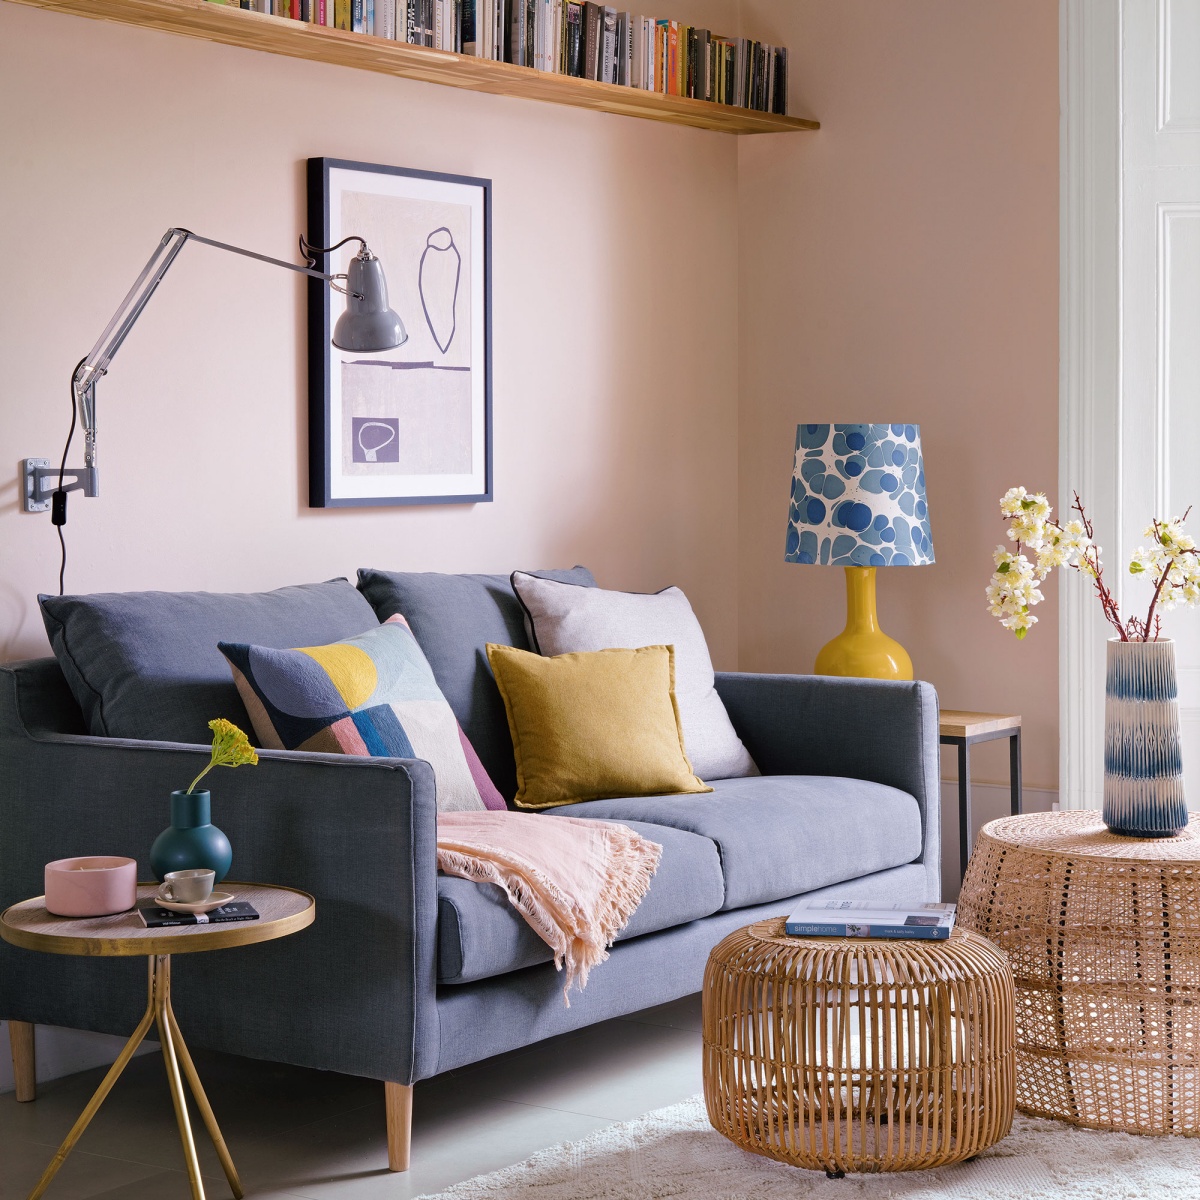 salotto moderno stile scandinavo arredamento divano blu